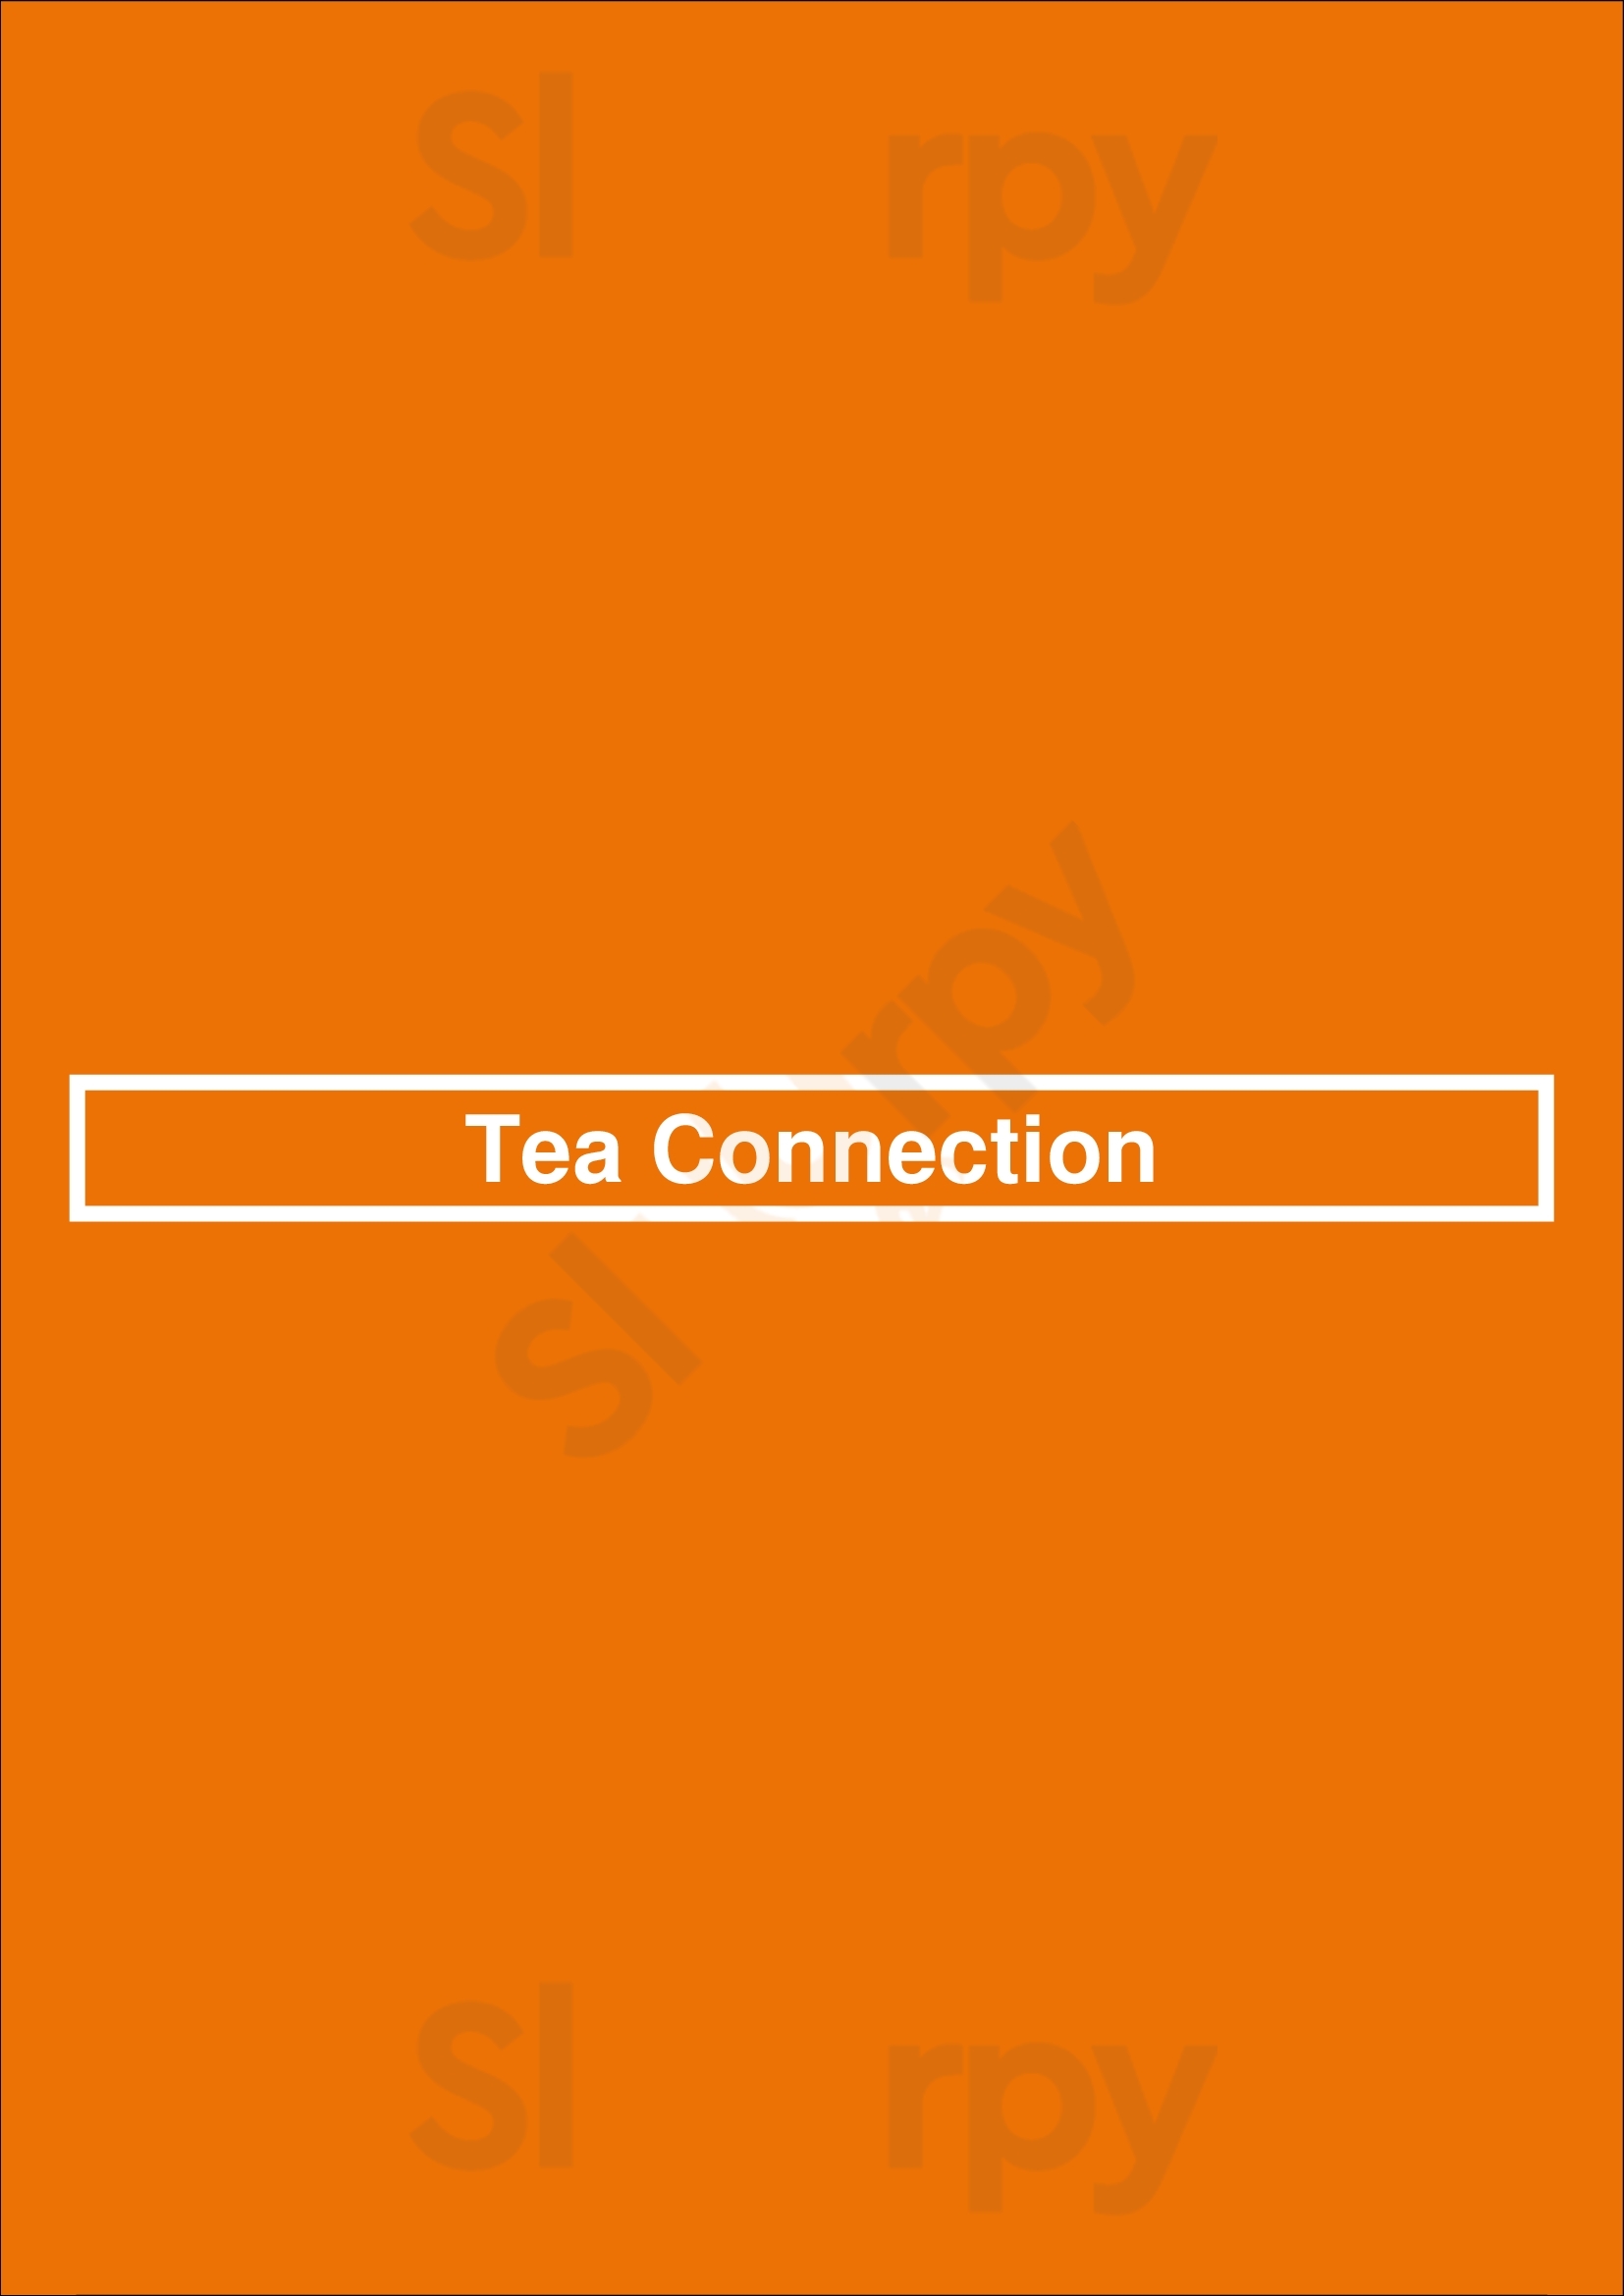 Tea Connection Buenos Aires Menu - 1